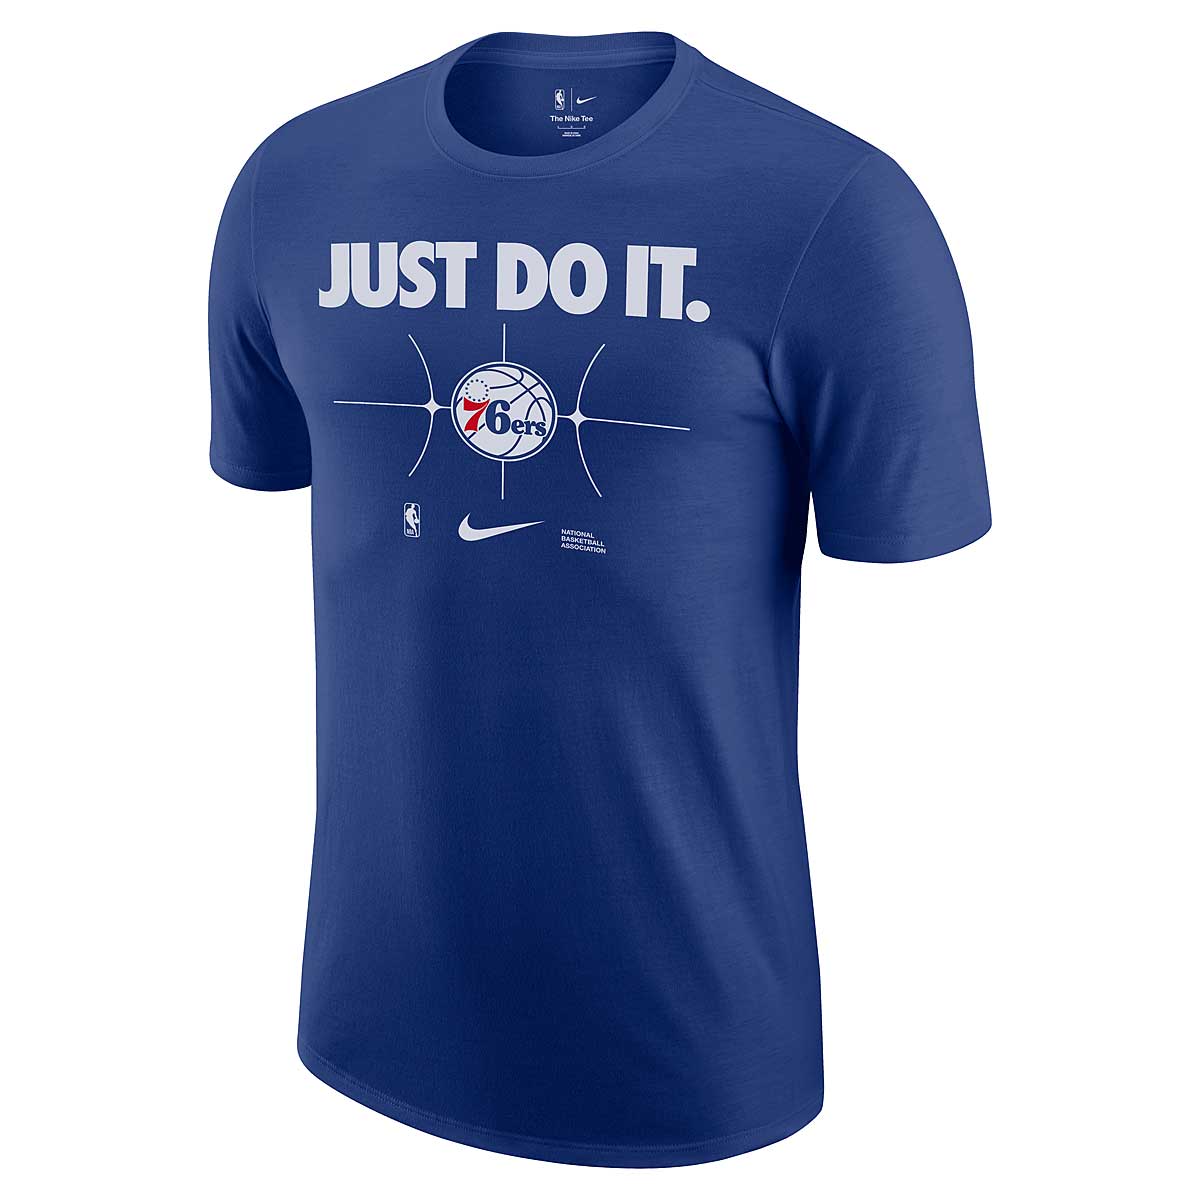 Nike NBA Philadelphia 76ers Essential Just Do It T-shirt, Rush Blue S